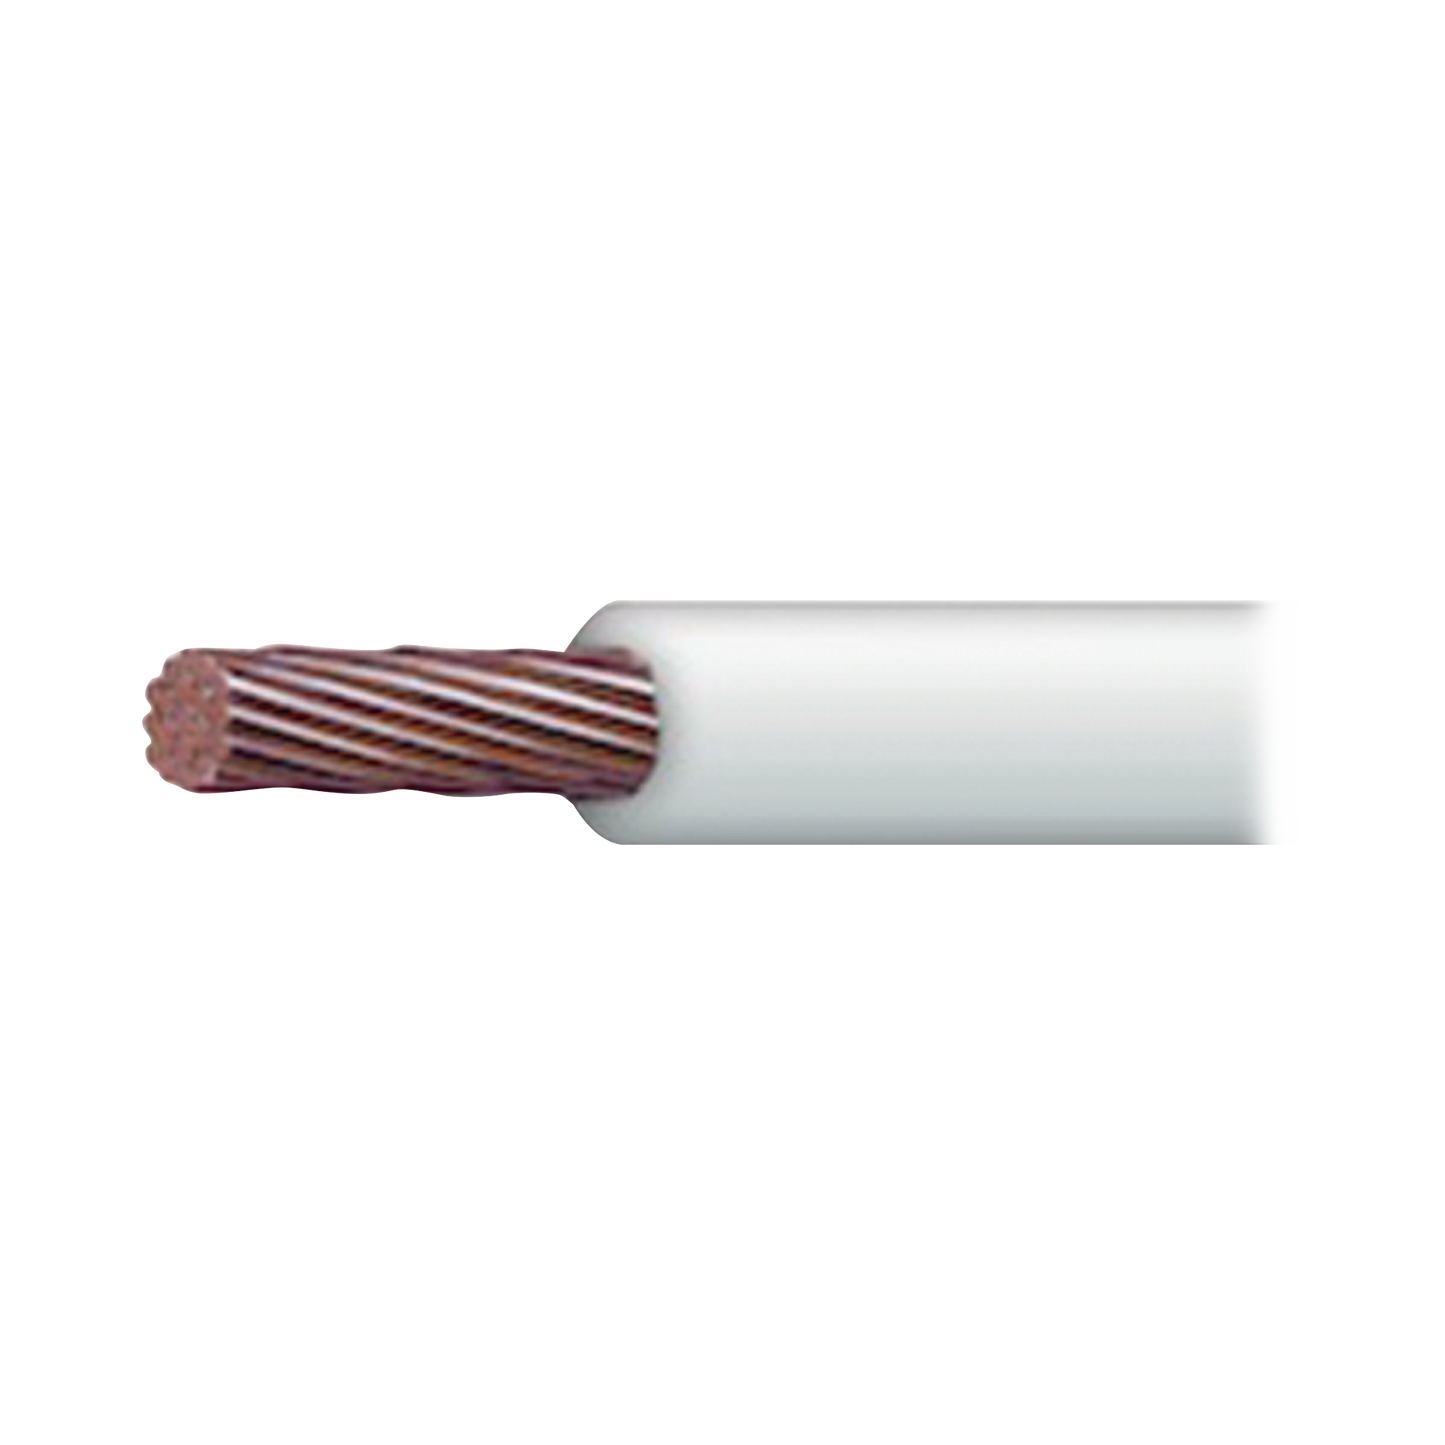 Cable Eléctrico 18 awg  color blanco, Conductor de cobre suave. Aislamiento de PVC, auto-extinguible. BOBINA de 100 MTS